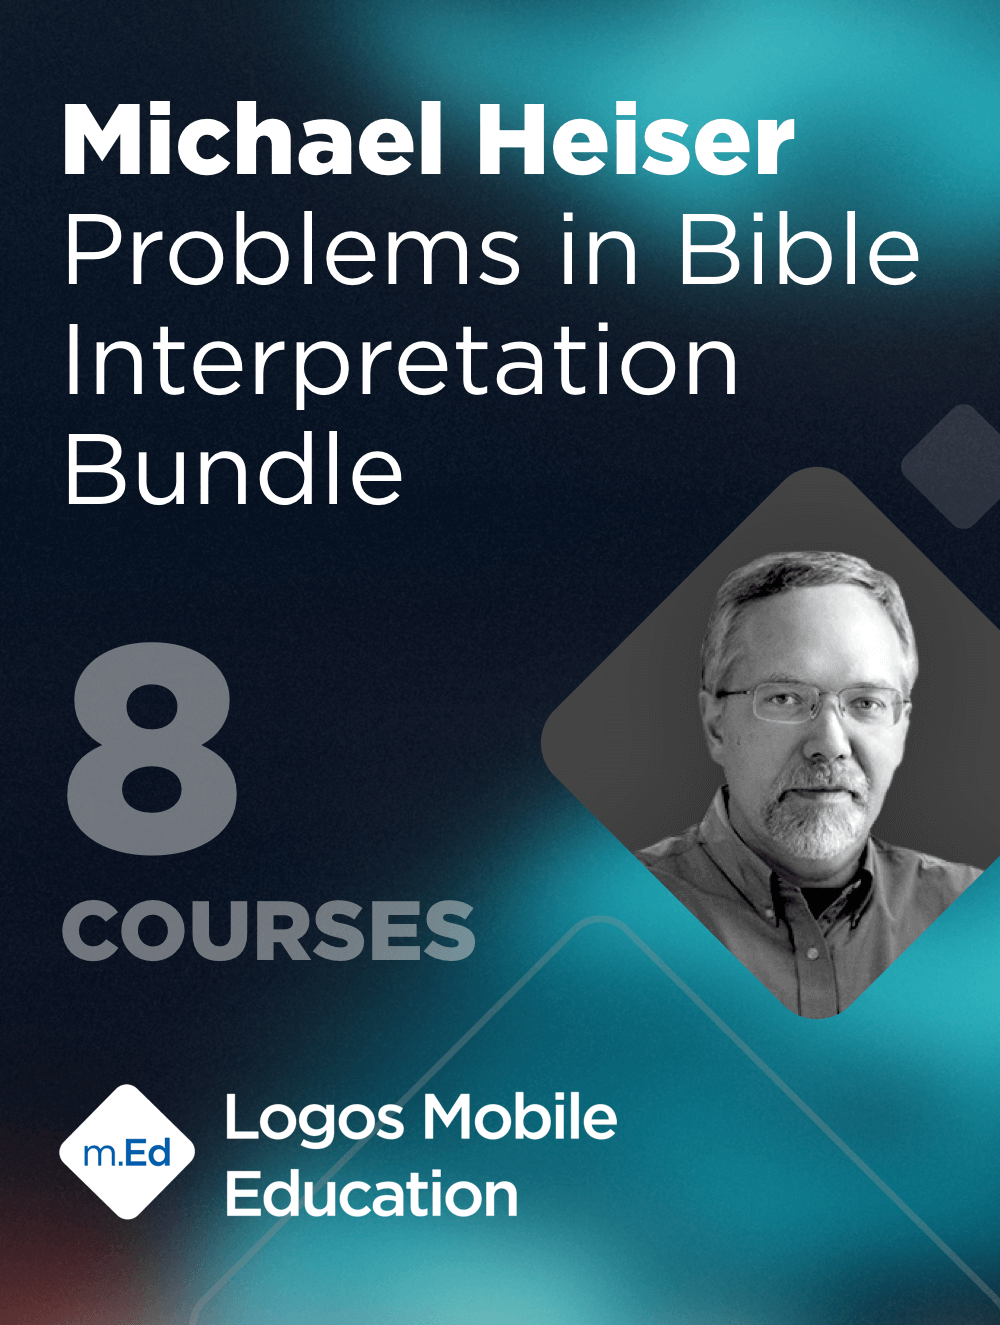 Mobile Ed: Michael Heiser Problems in Bible Interpretation Bundle (8 courses)